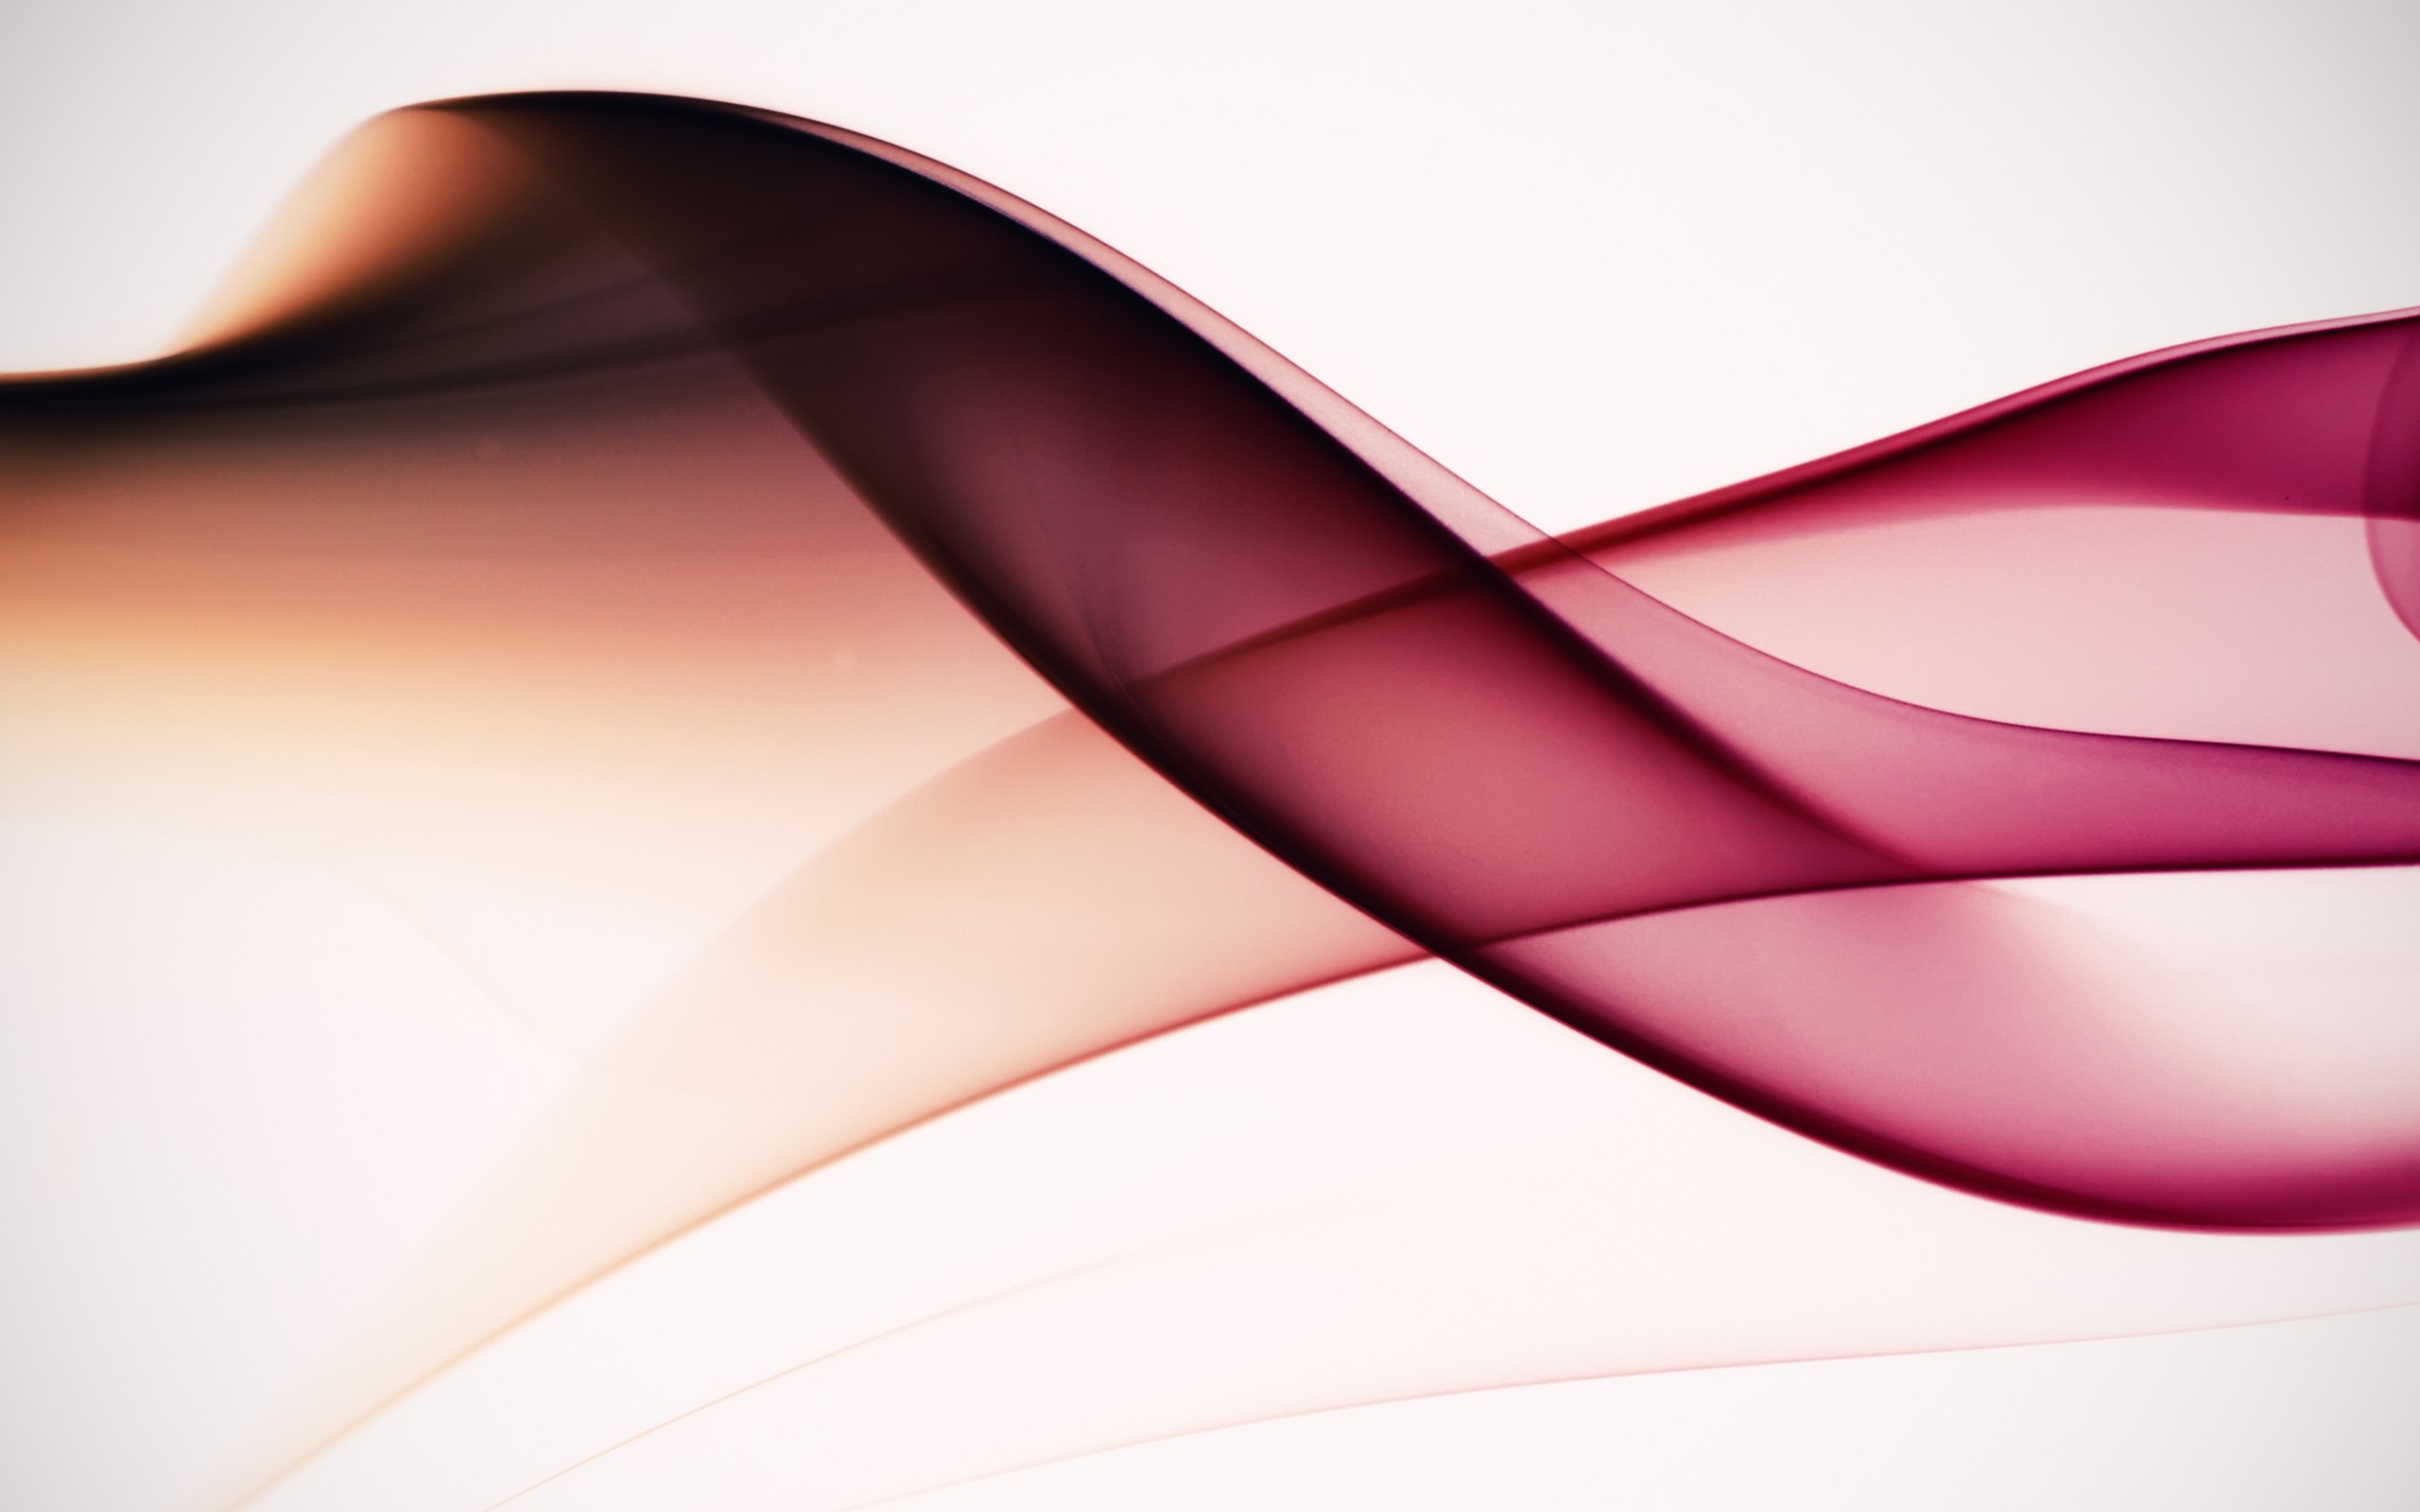 abstract, white, pink, smoke - desktop wallpaper